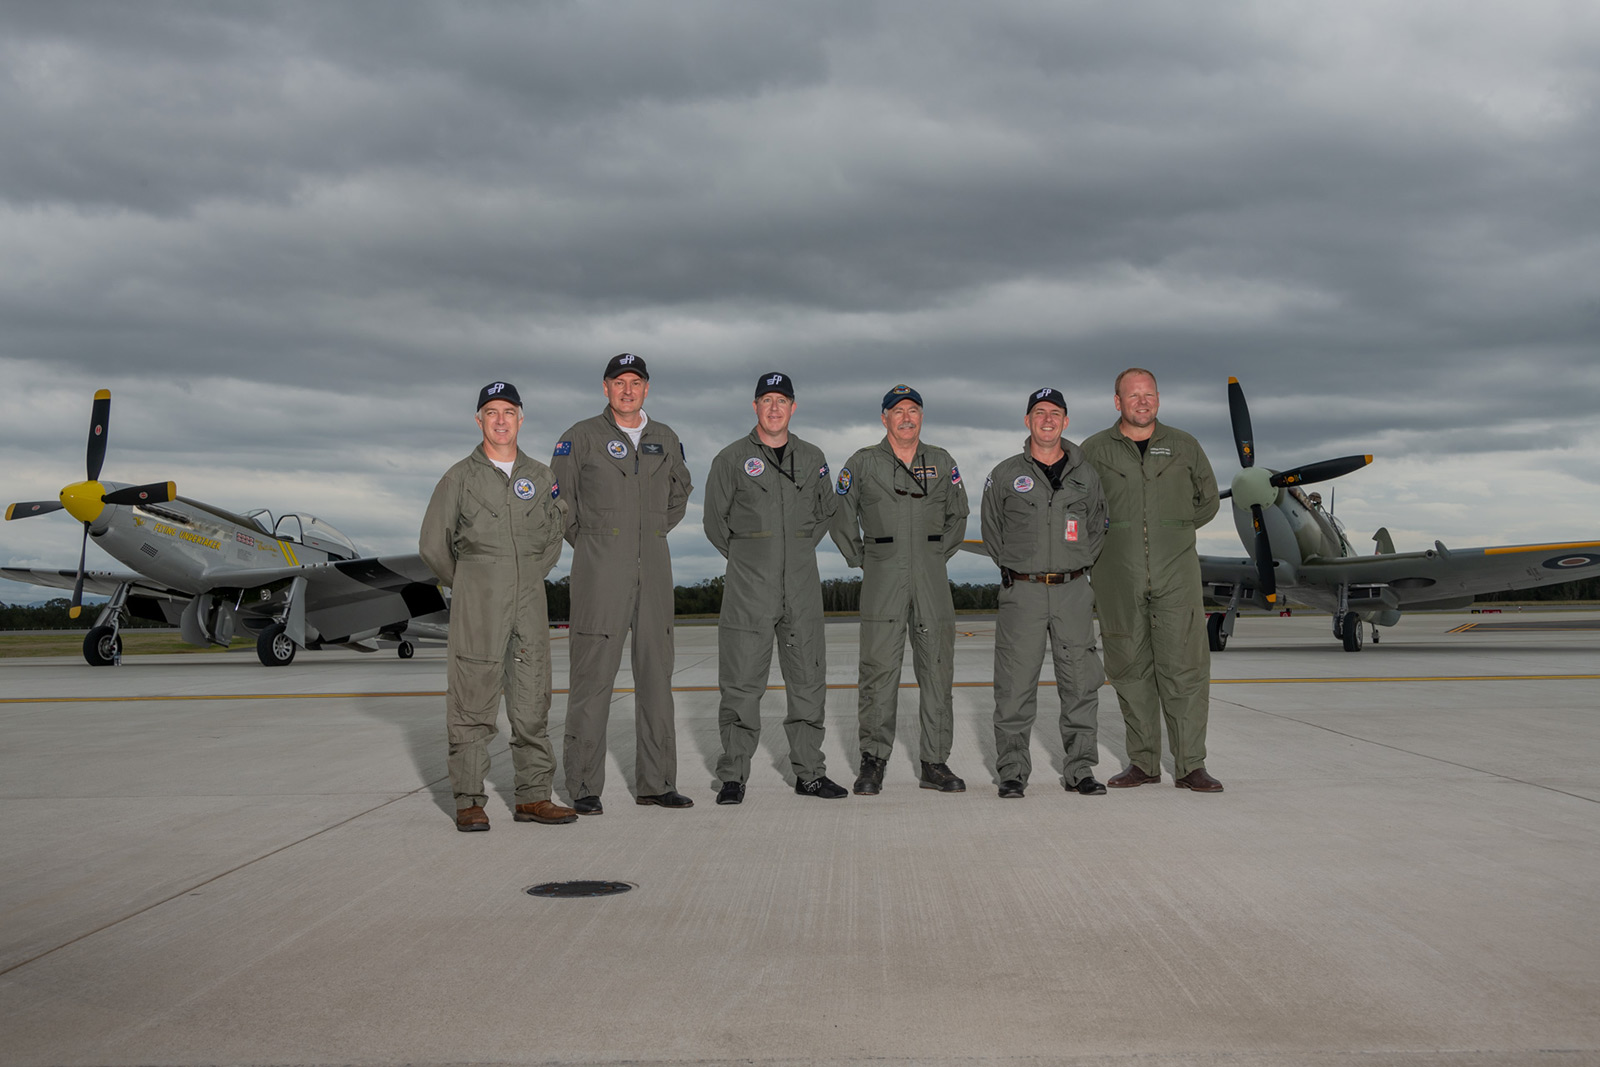 The team from Fighter Pilot Adventure Flights